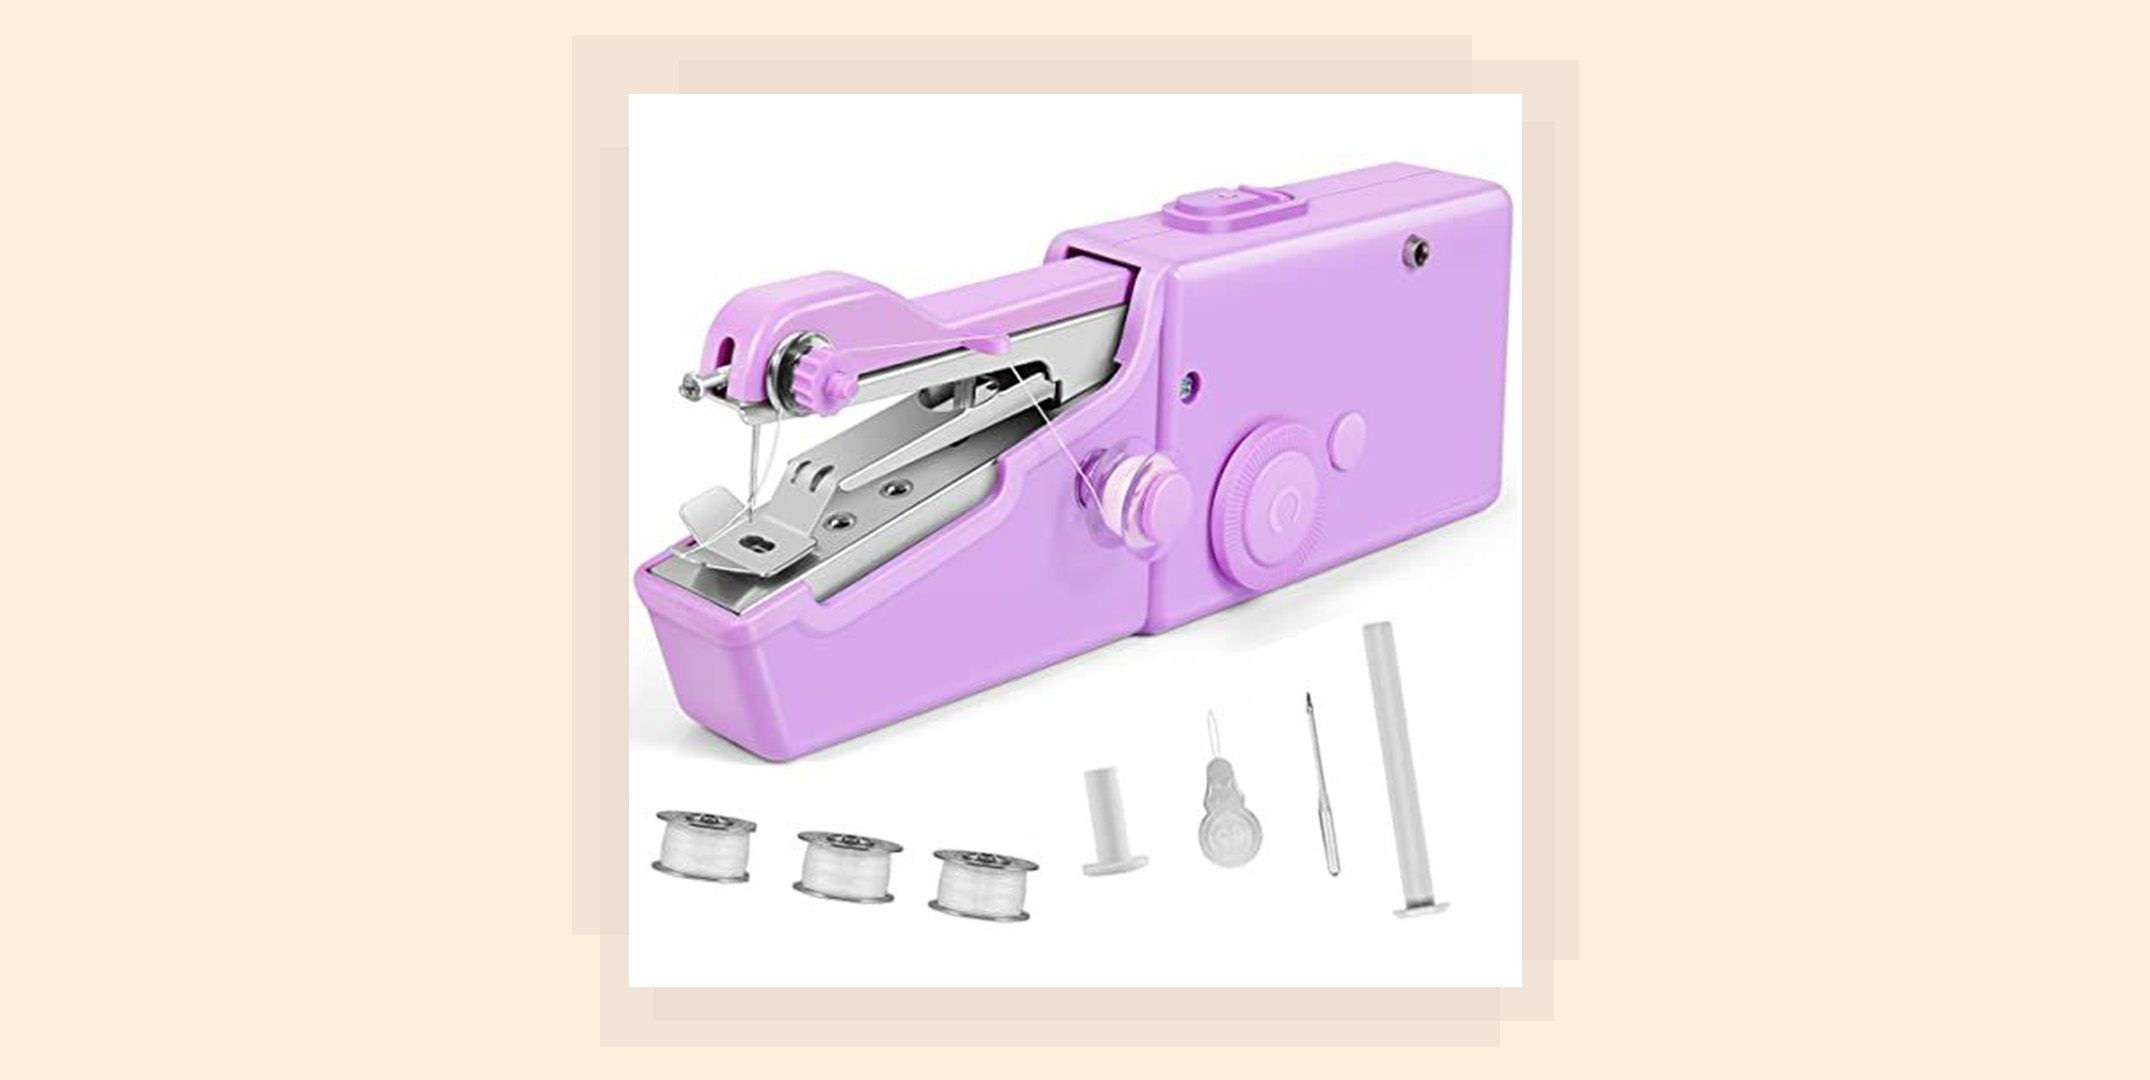 Portable Electric Mini Multi-function Portable Hand Held Desktop Sewing  Machine